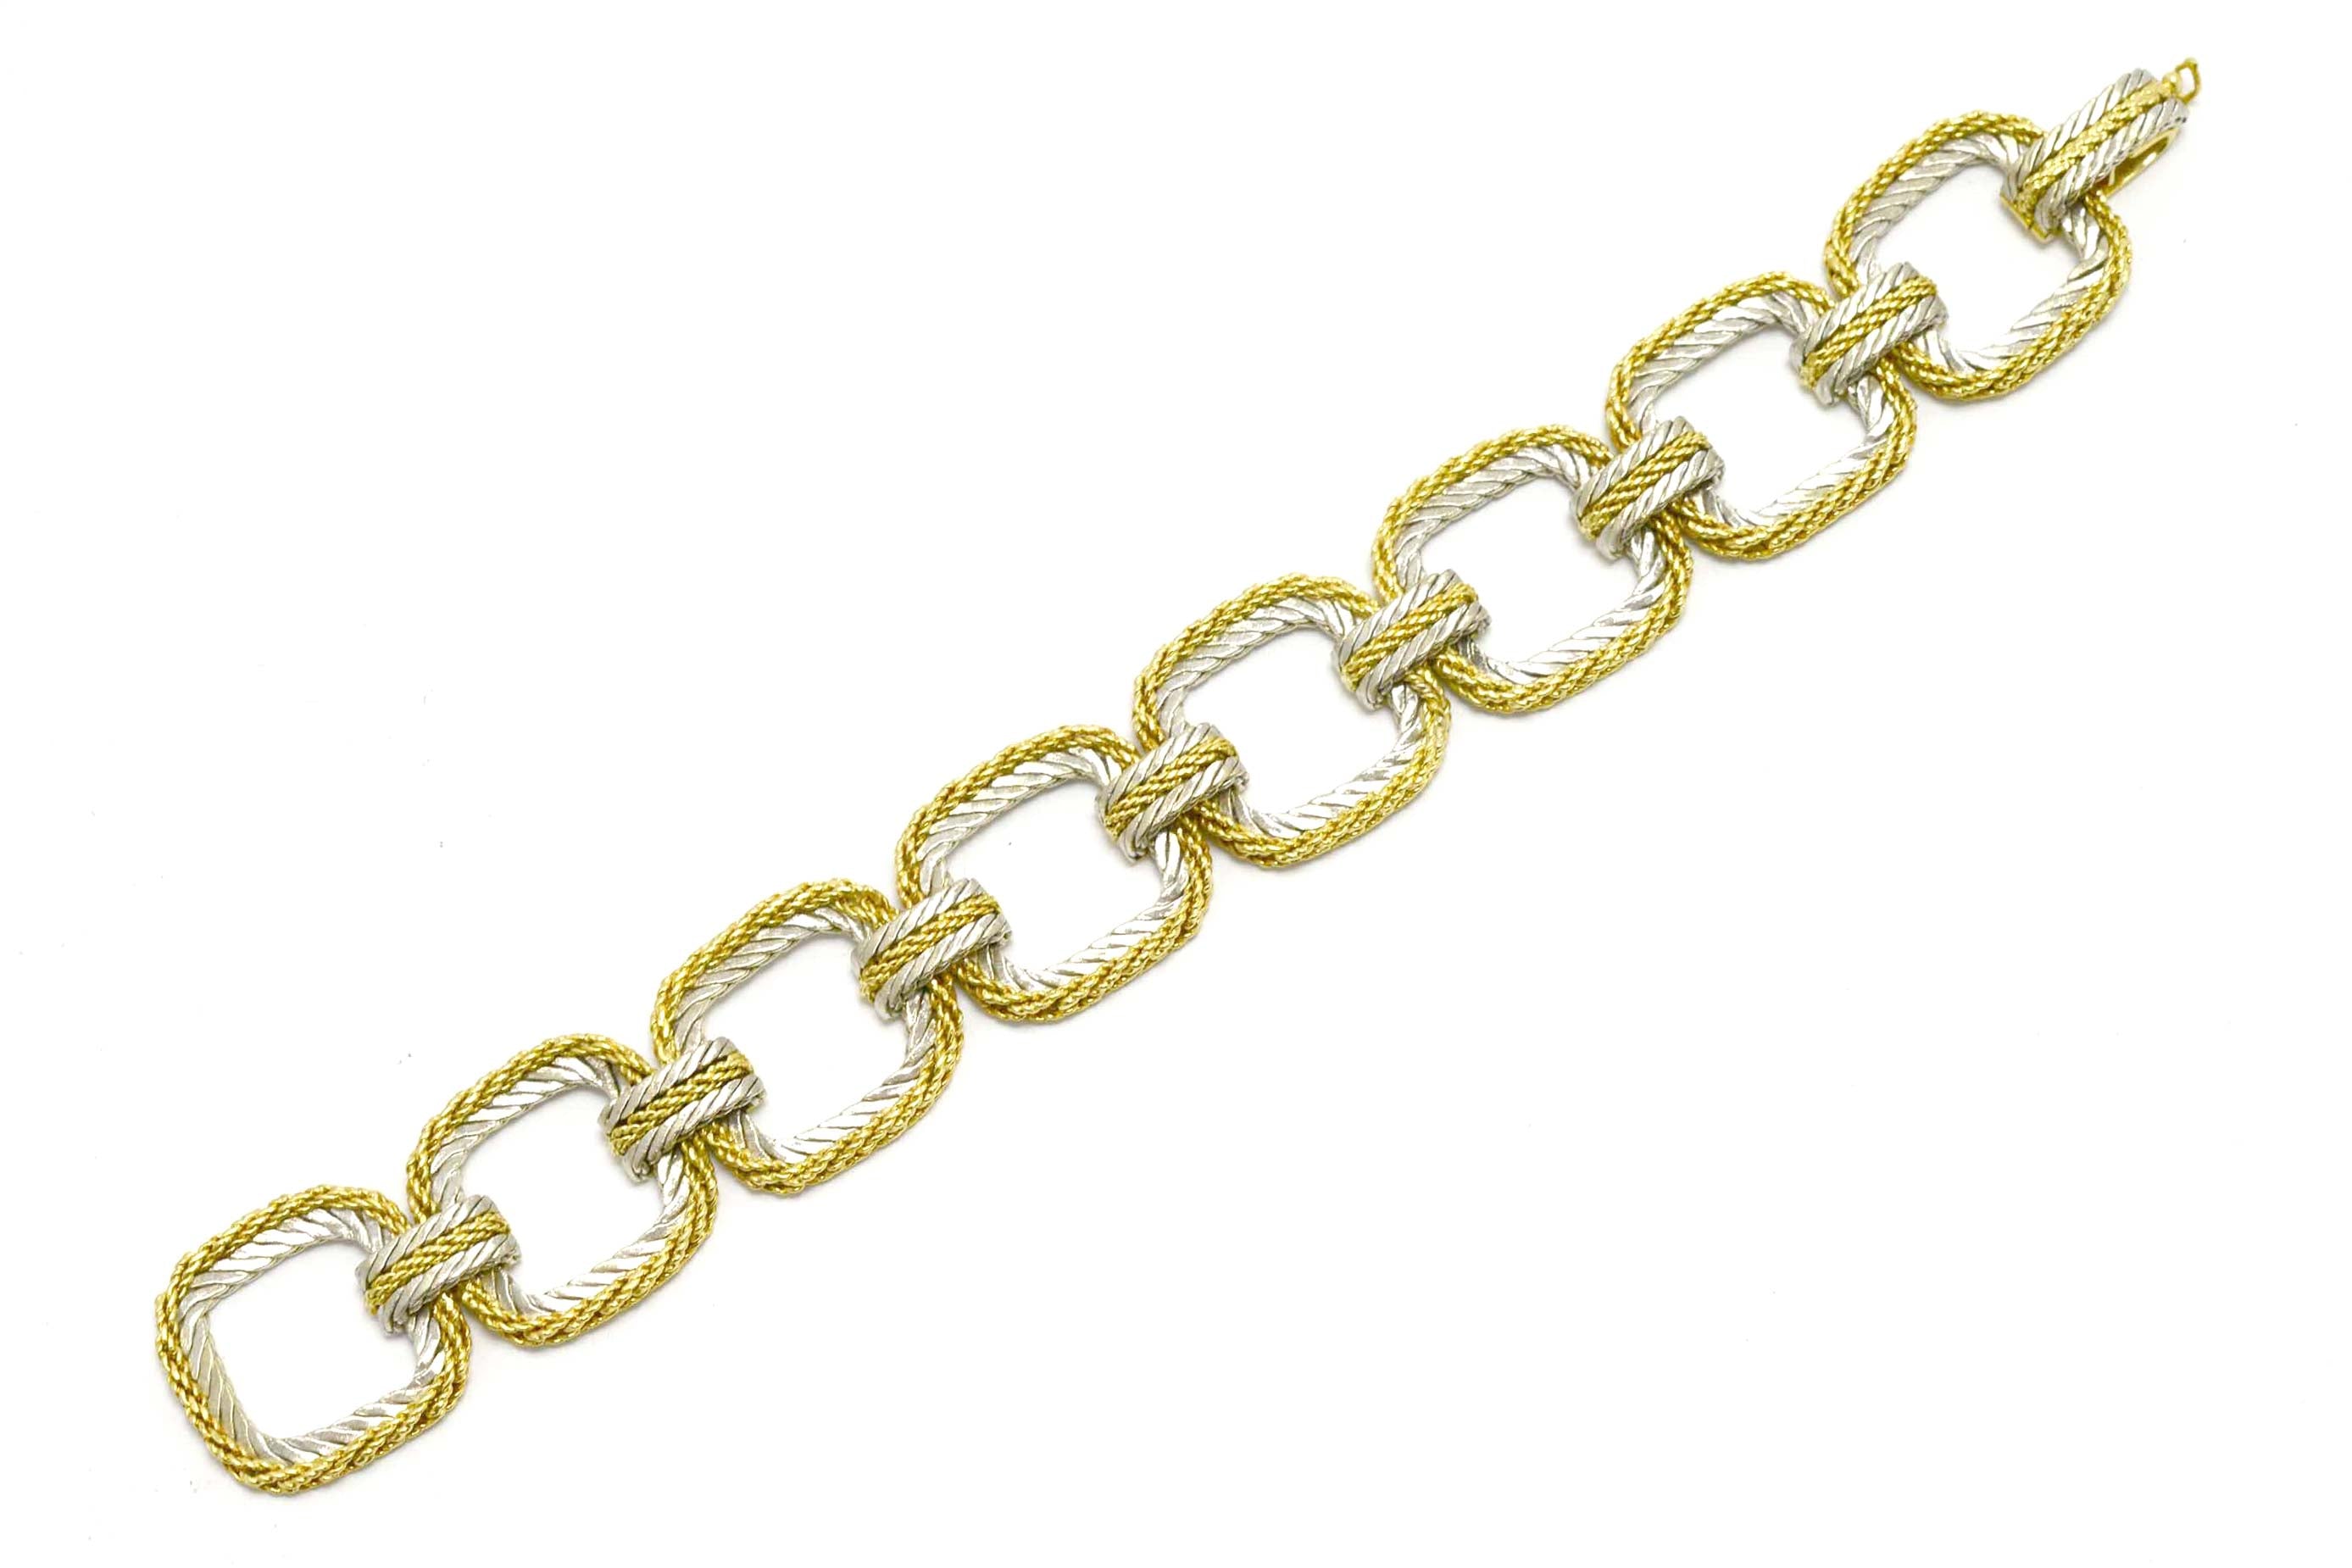 An 8" gold designer bracelet by Buccellati.